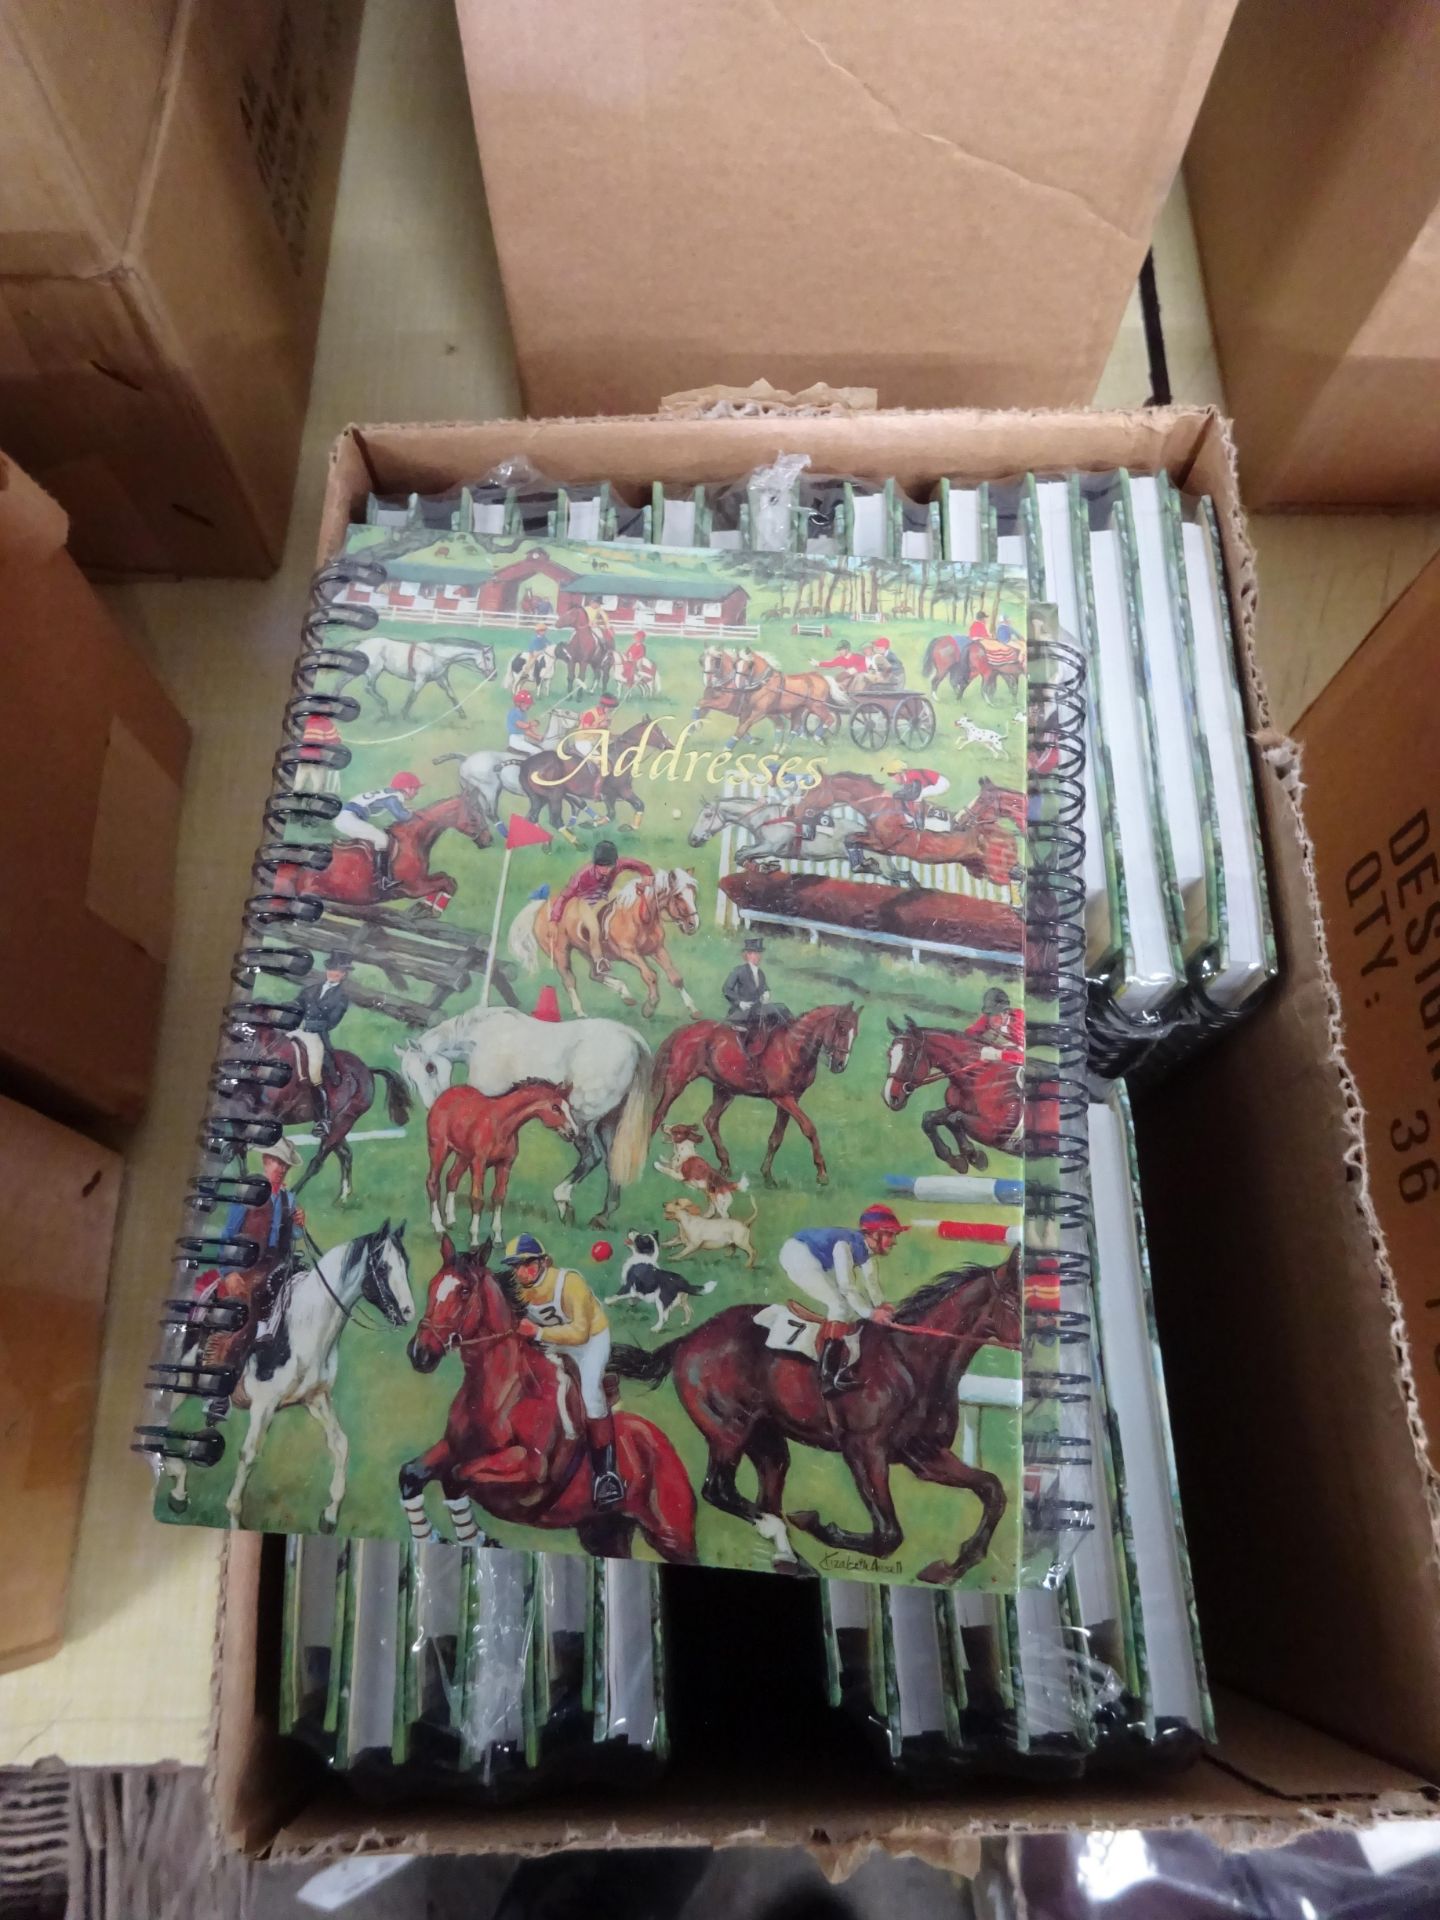 BOX OF 36 HORSE DESIGN ADDRESS BOOKS